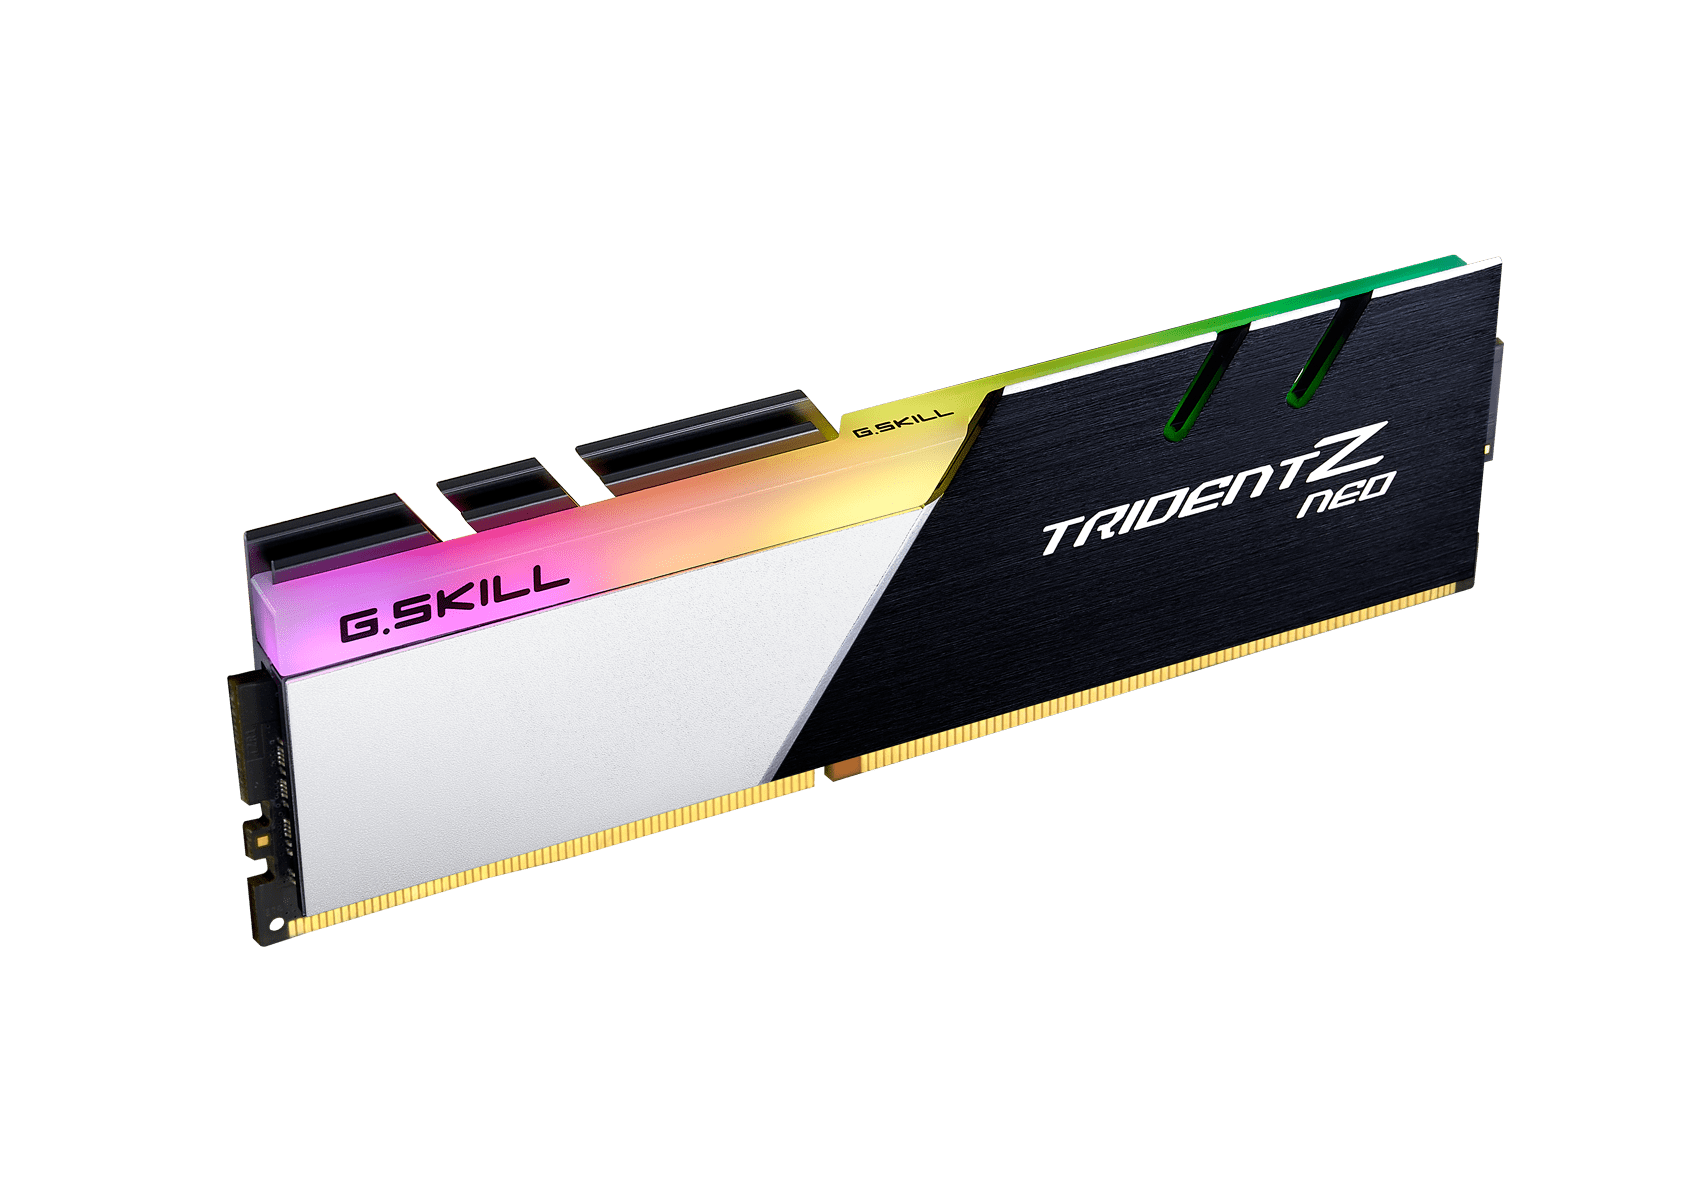 Памет G.SKILL Trident Z Neo RGB 16GB(2x8GB) DDR4 PC4-25600 3200MHz CL16 F4-3200C16D-16GTZN-4